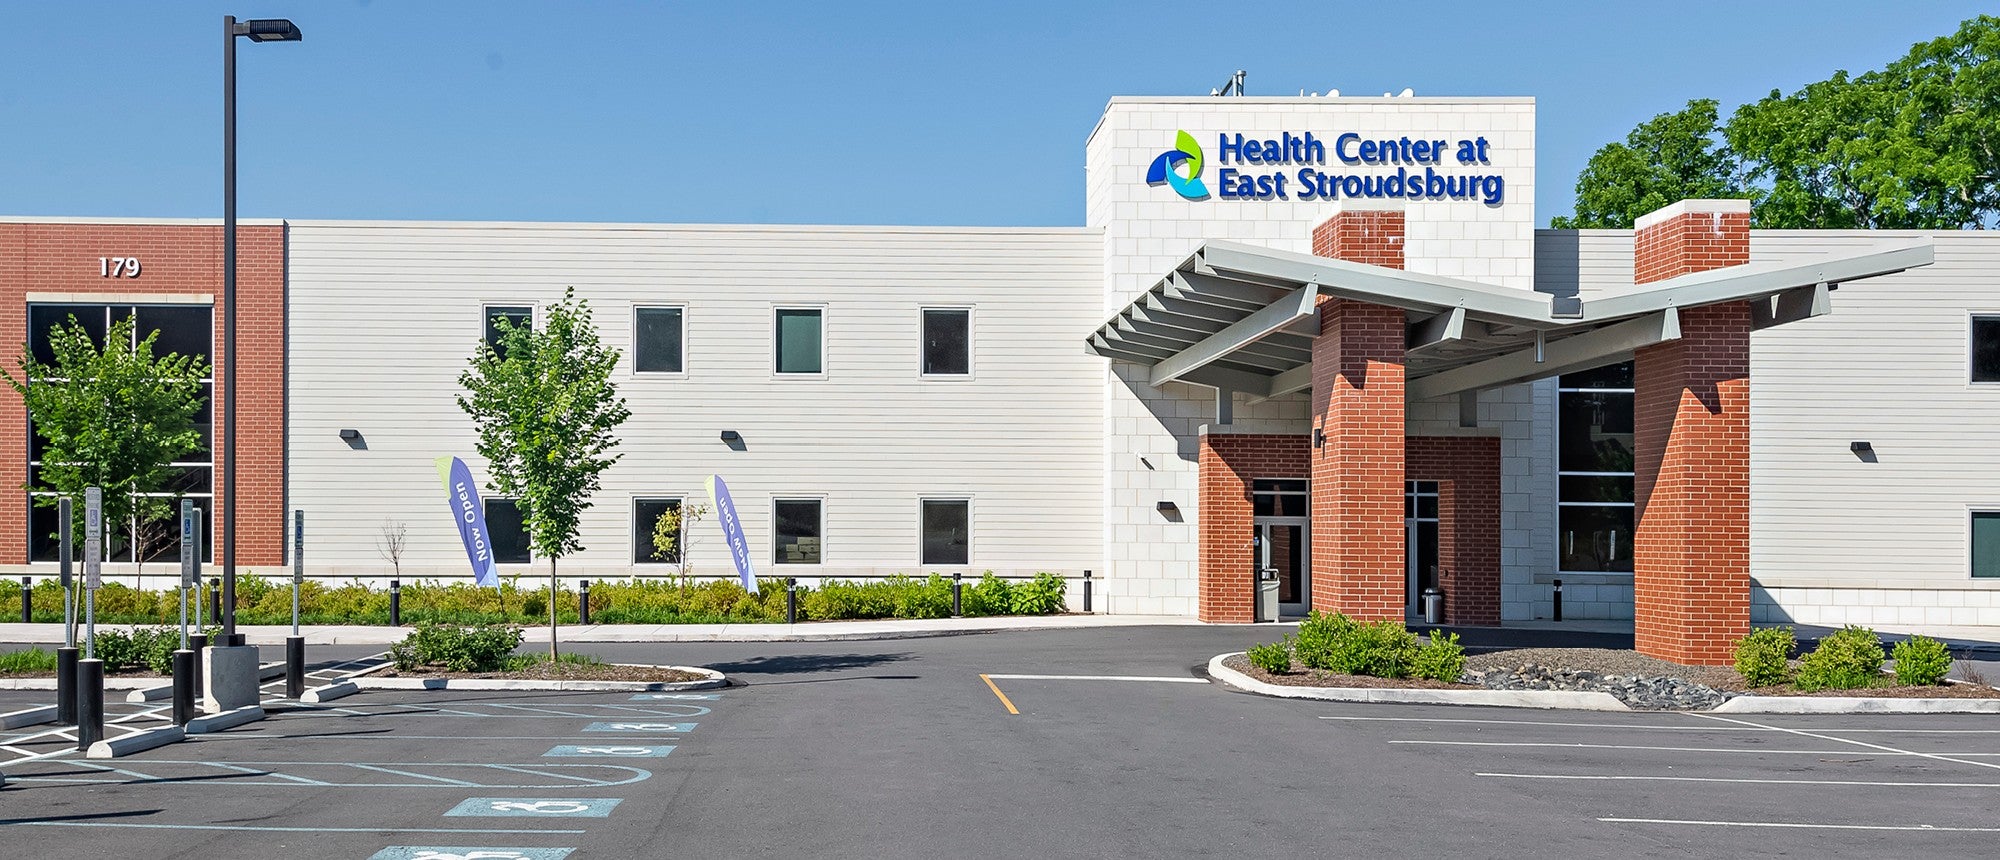 Health Center at East Stroudsburg